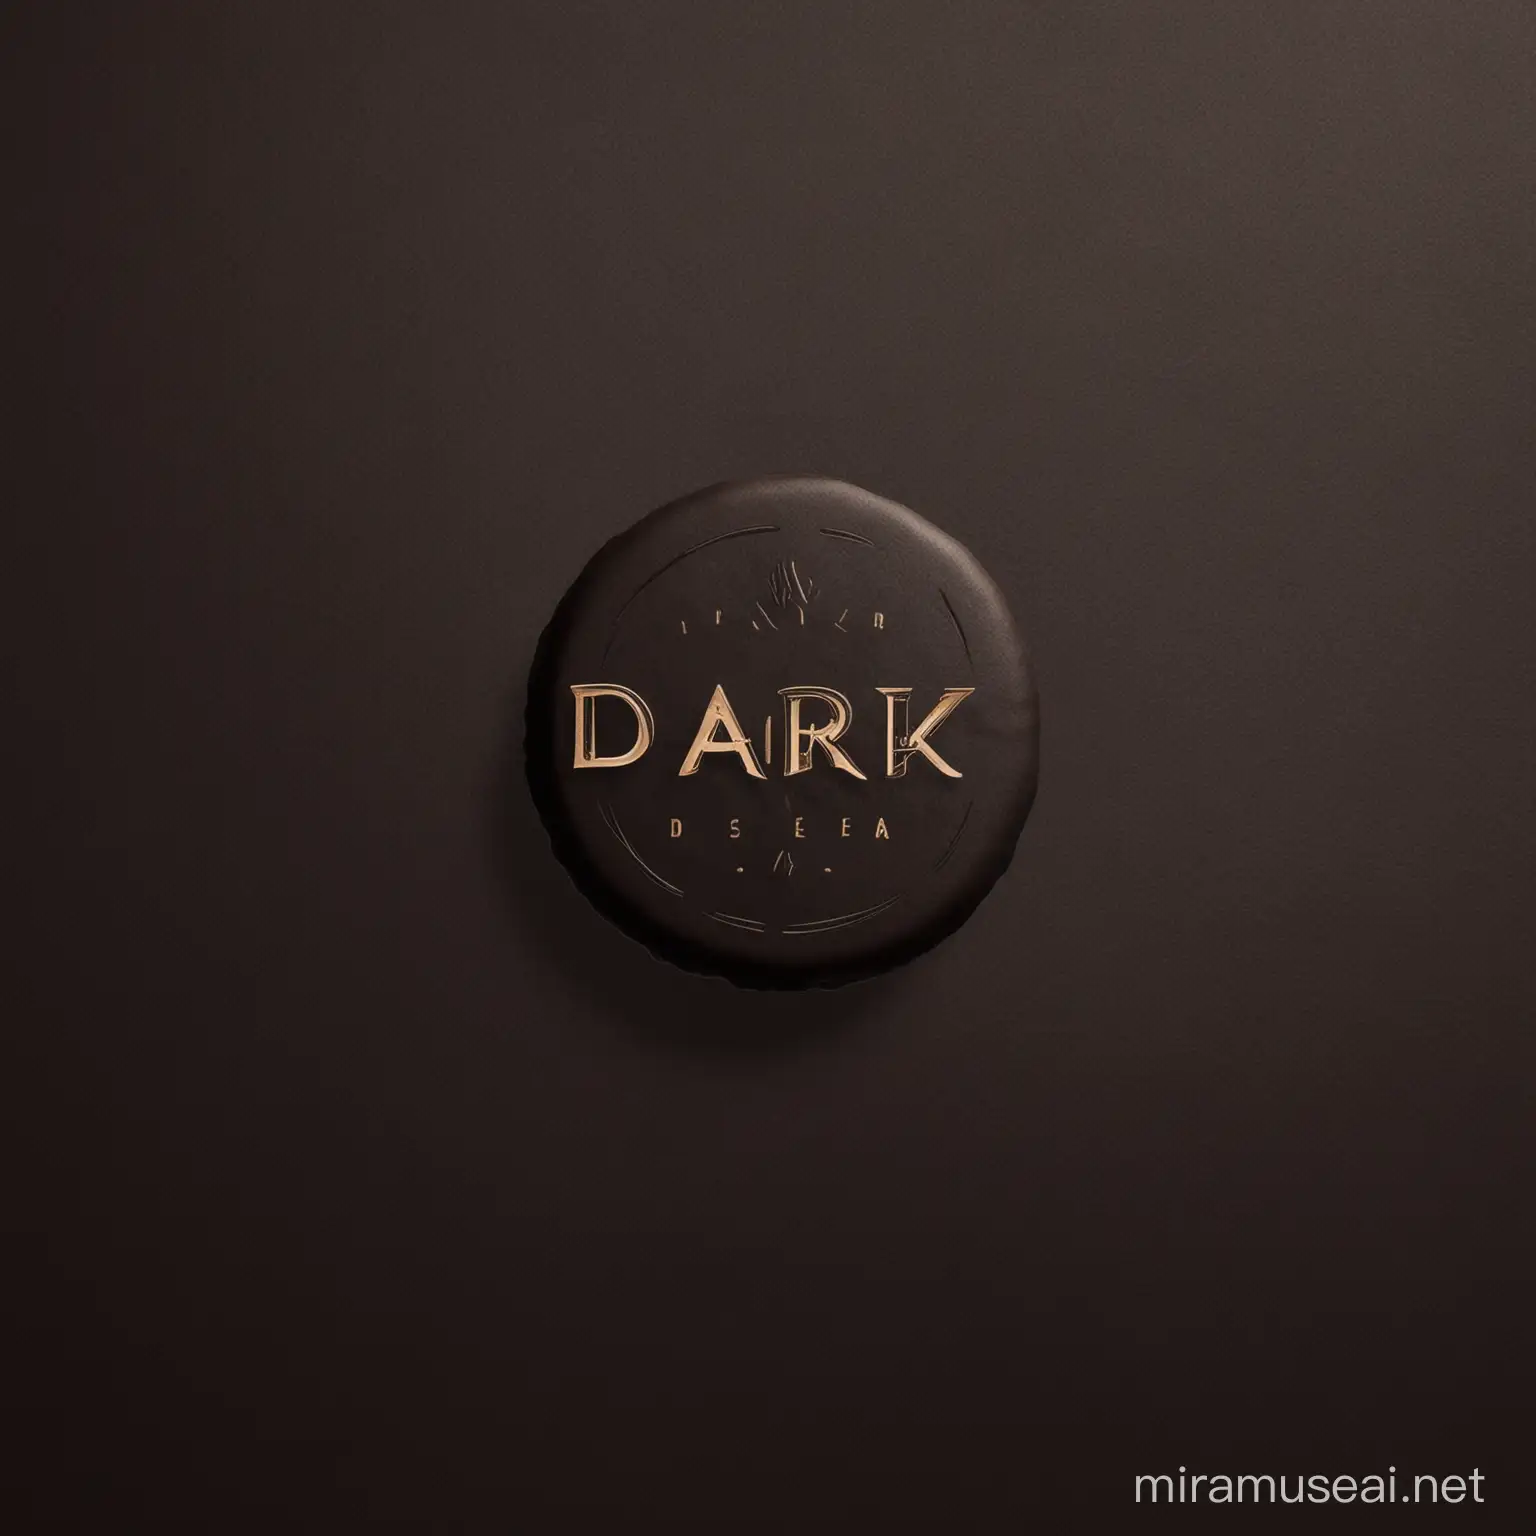 Logo of a dessert brand company names "Dark Dessert". Logo should be minimalistic, represent luxury, with dark shades